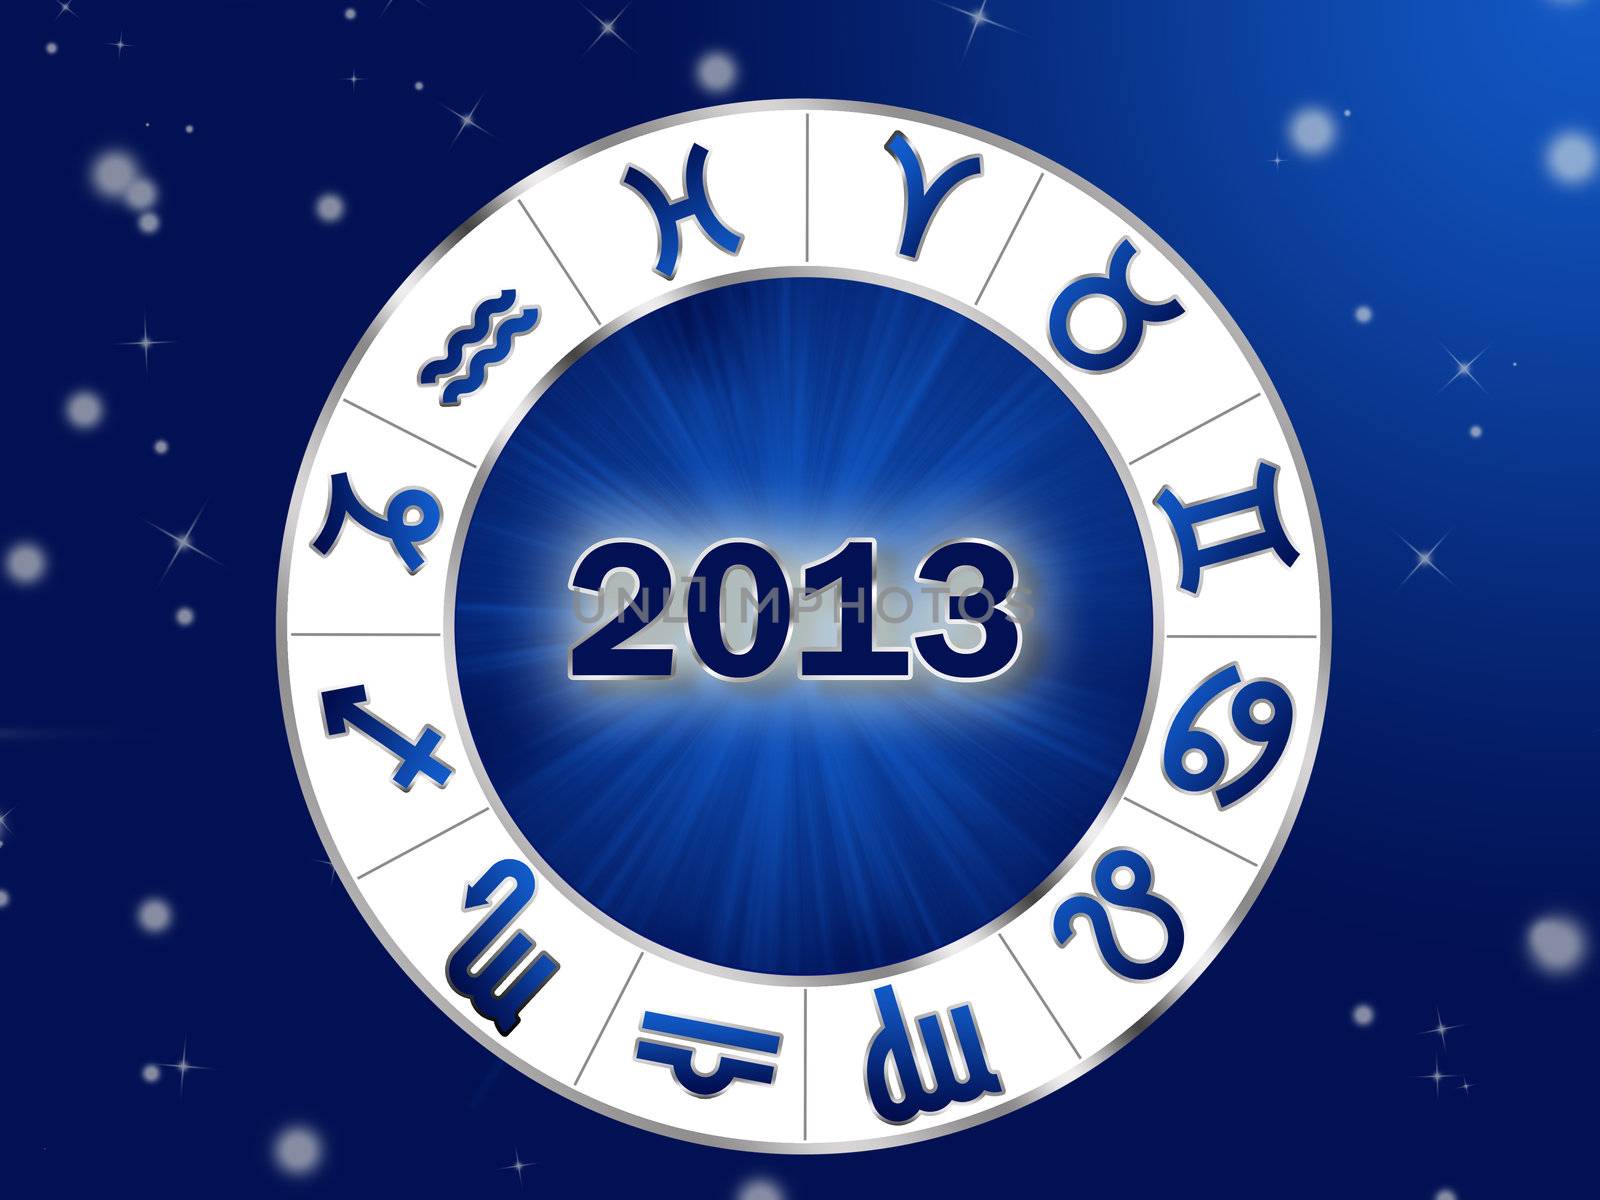 Zodiac signs 2013